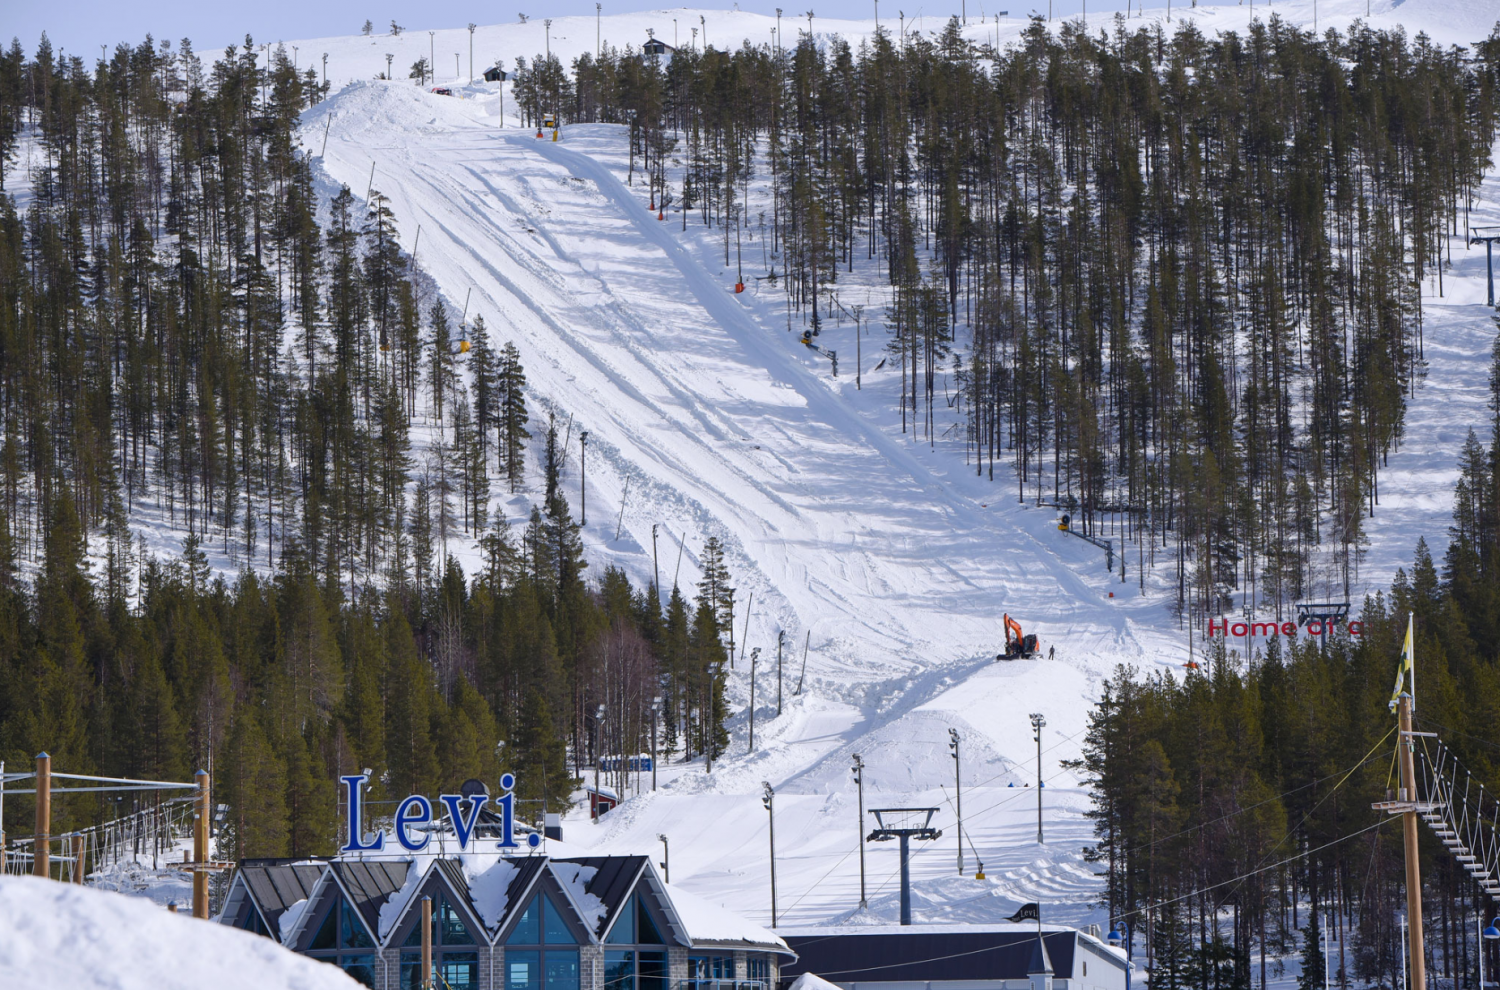 A Finnish Arctic ski resort closed by coronavirus tests a creative to plan next season - ArcticToday